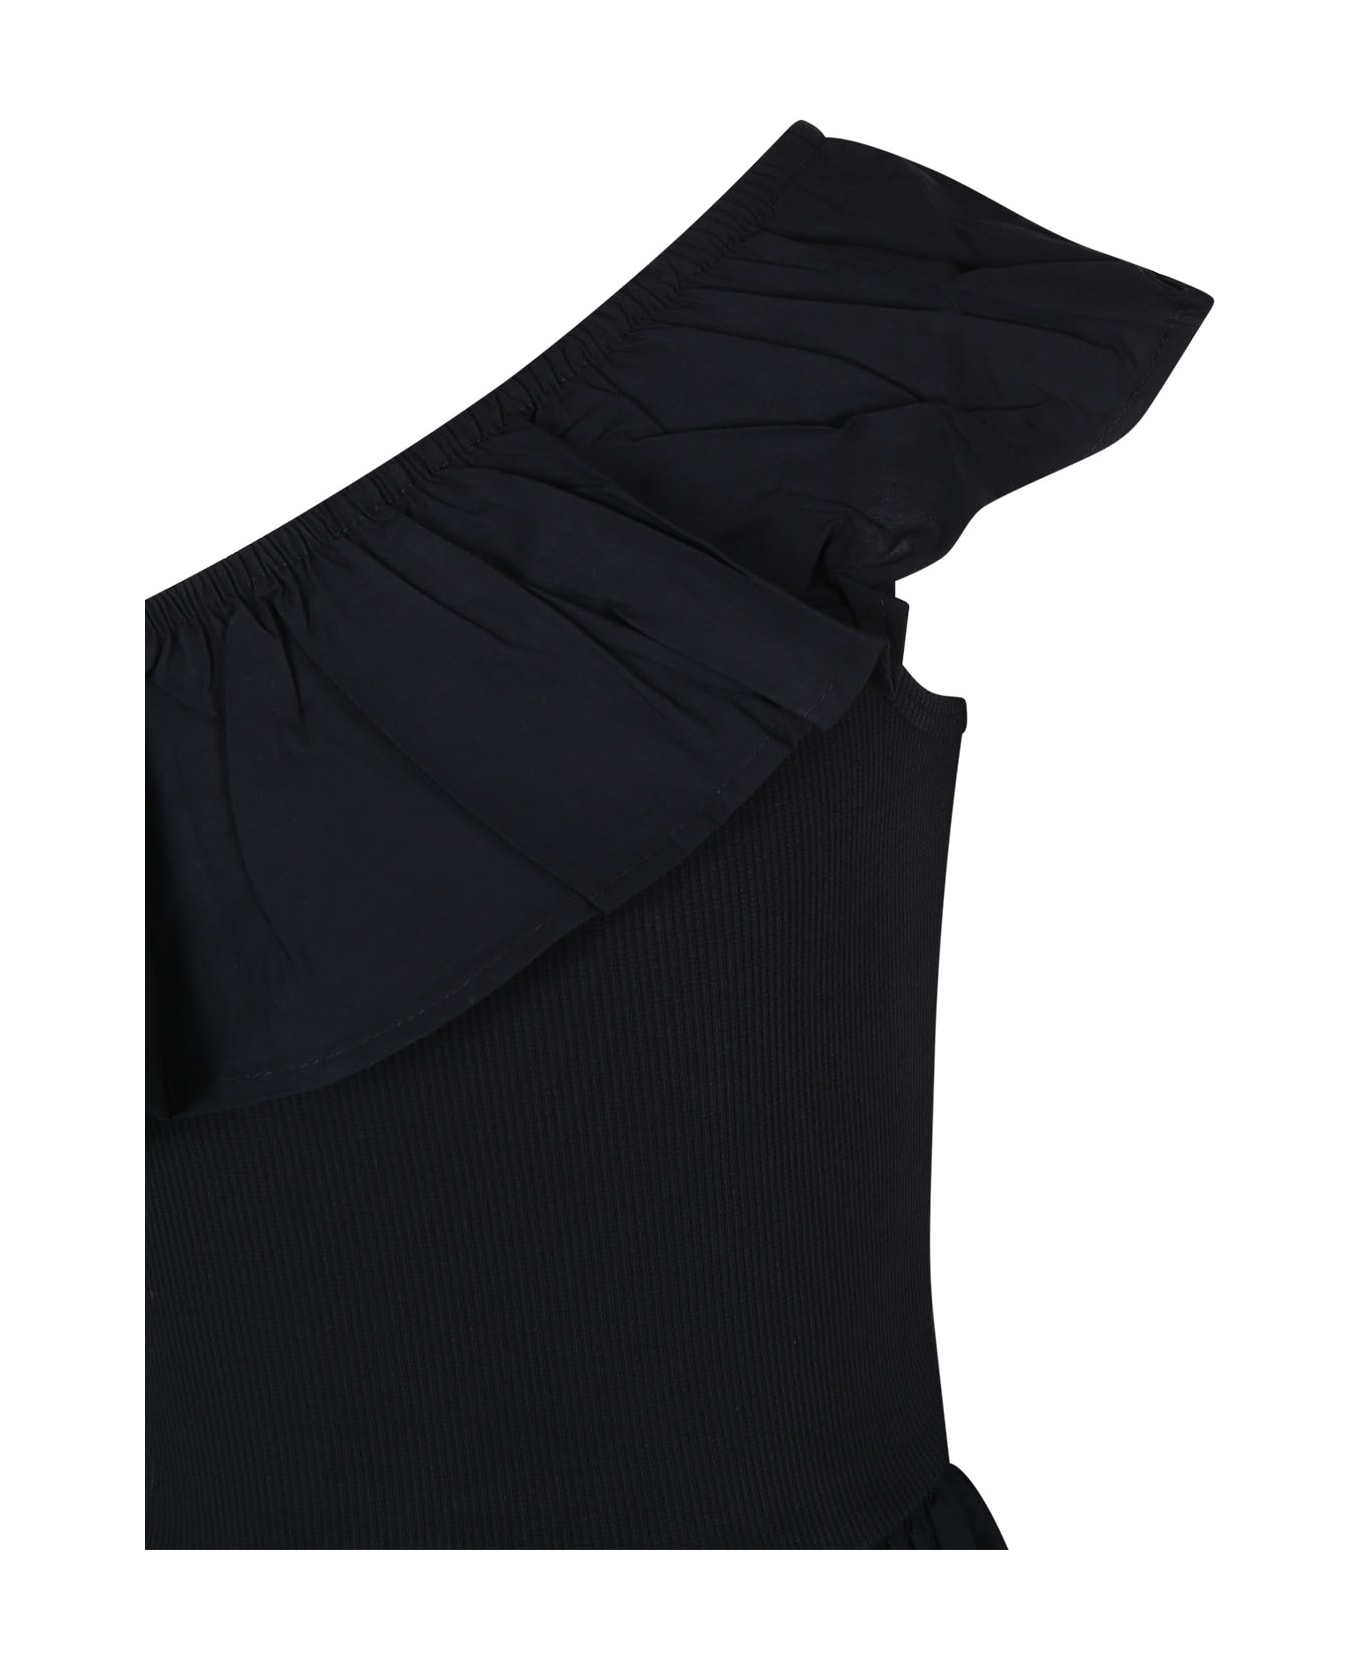 Molo Black Dress For Girl - Black